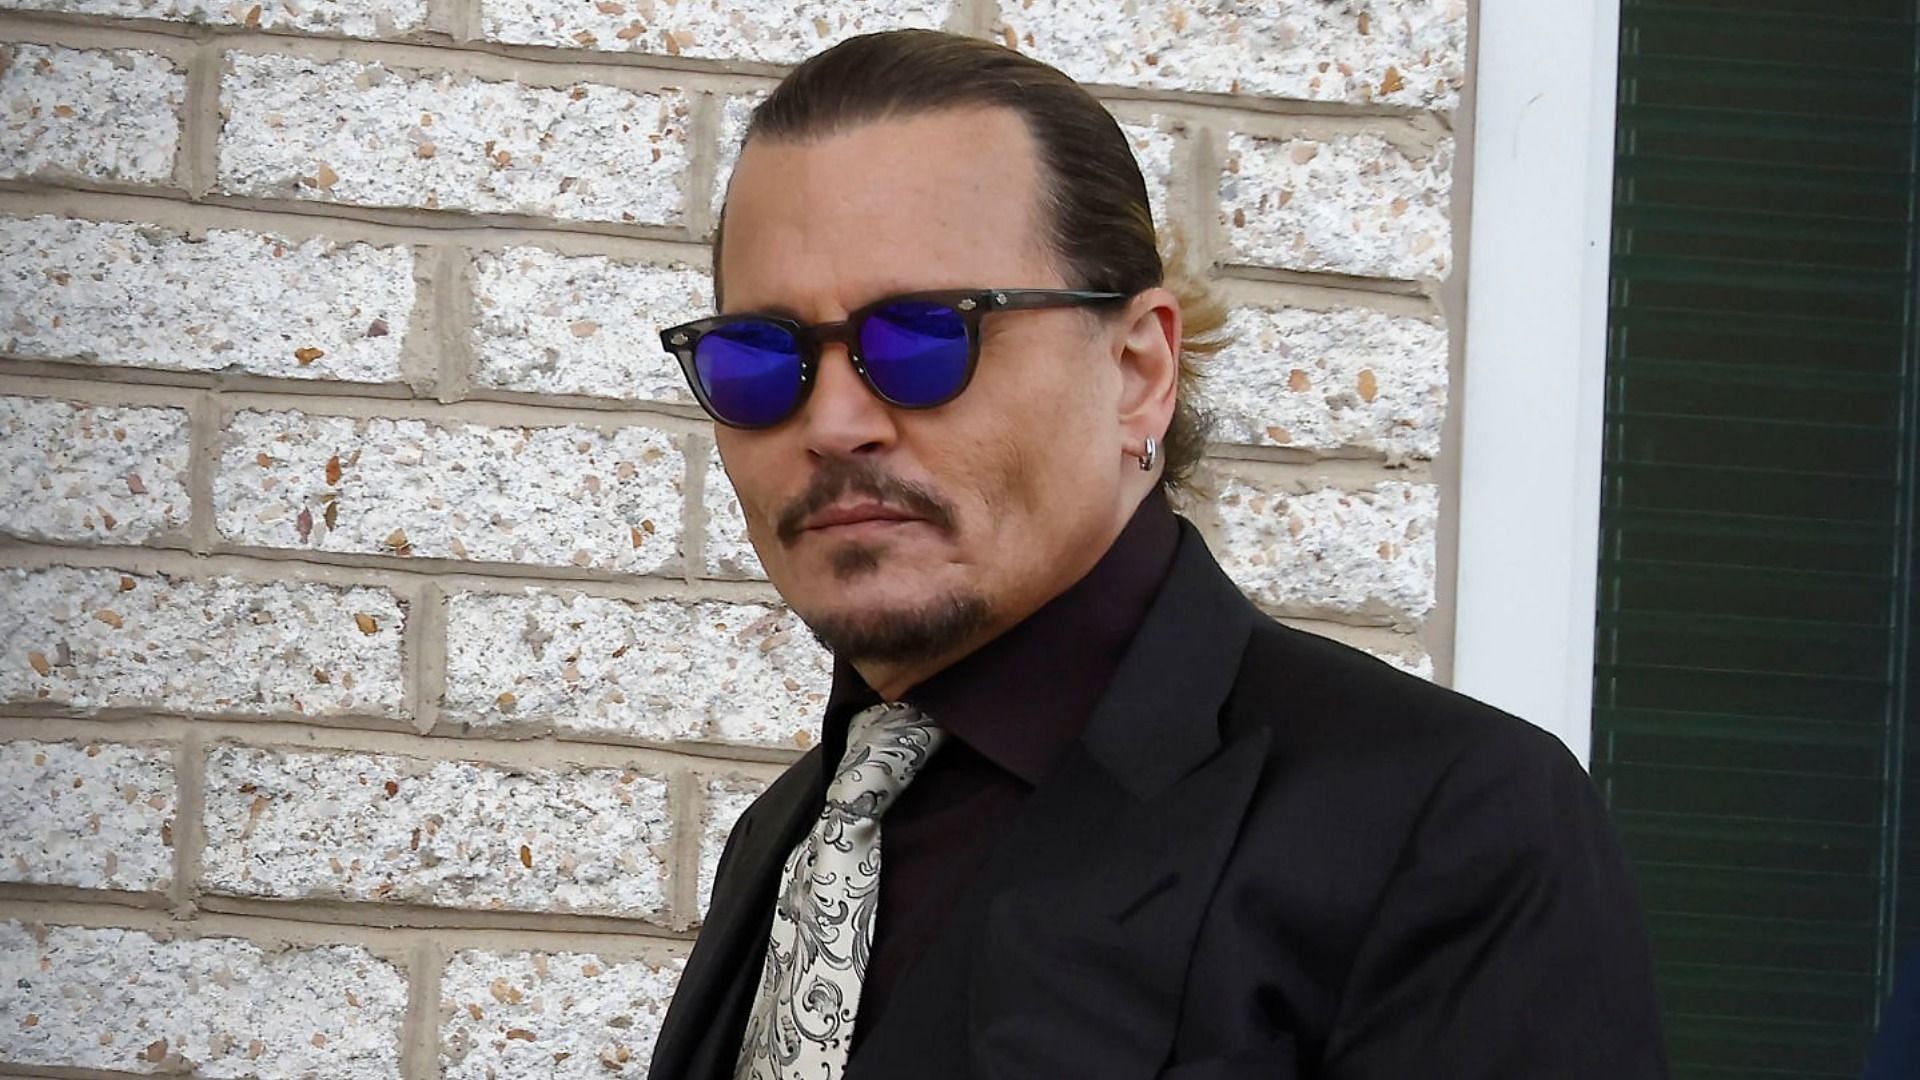 Johnny Depp at his defamation trial against Amber Heard (Image via Paul Morigi/Getty Images)